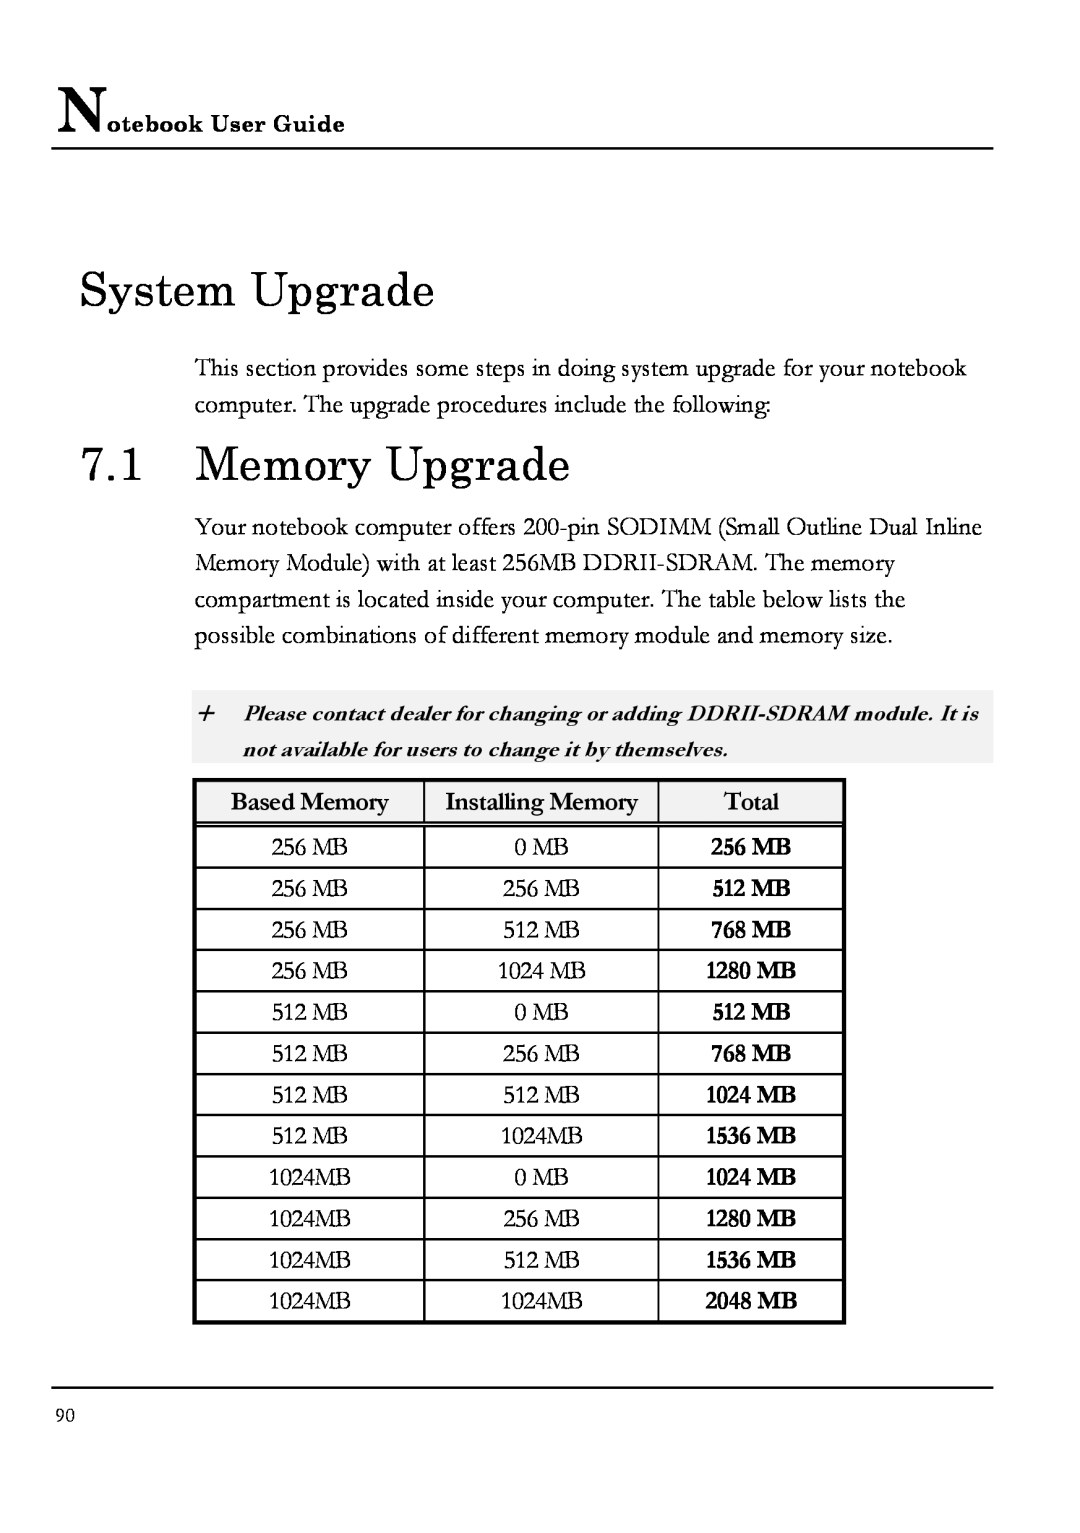 Everex NM3500W System Upgrade, Memory Upgrade, Based Memory, Installing Memory, Total, 256 MB, 512 MB, 768 MB, 2048 MB 